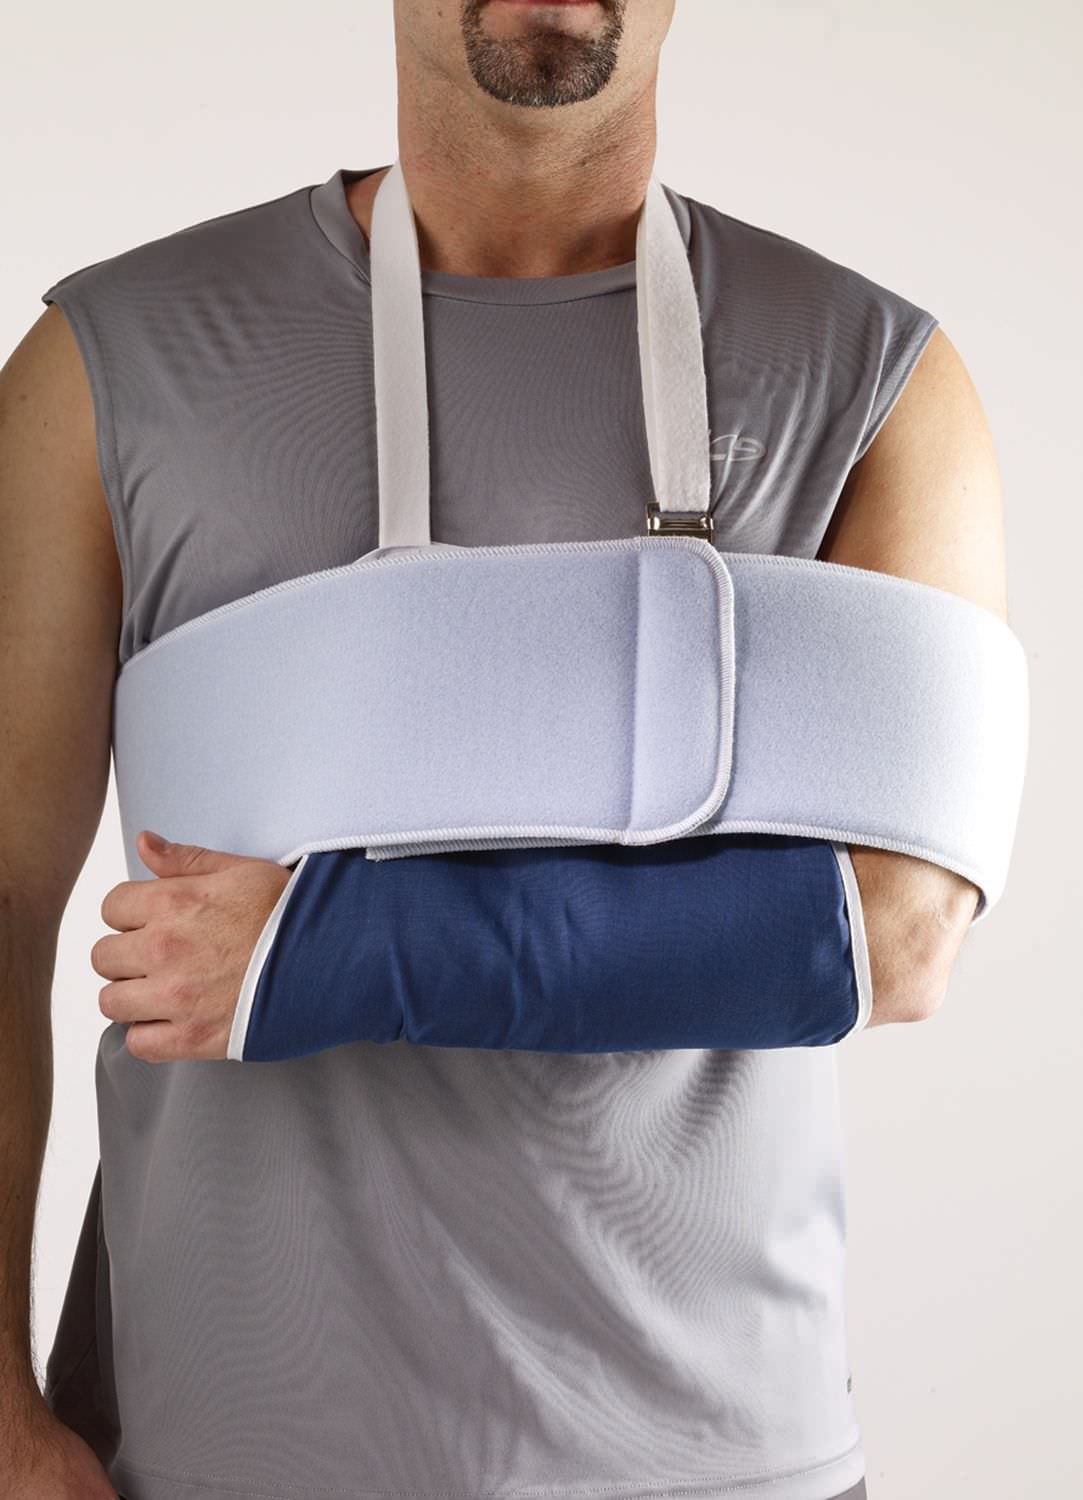 Shoulder splint (orthopedic immobilization) 23-1746 / 23-1747 / 23-1748 / 23-1749 Corflex